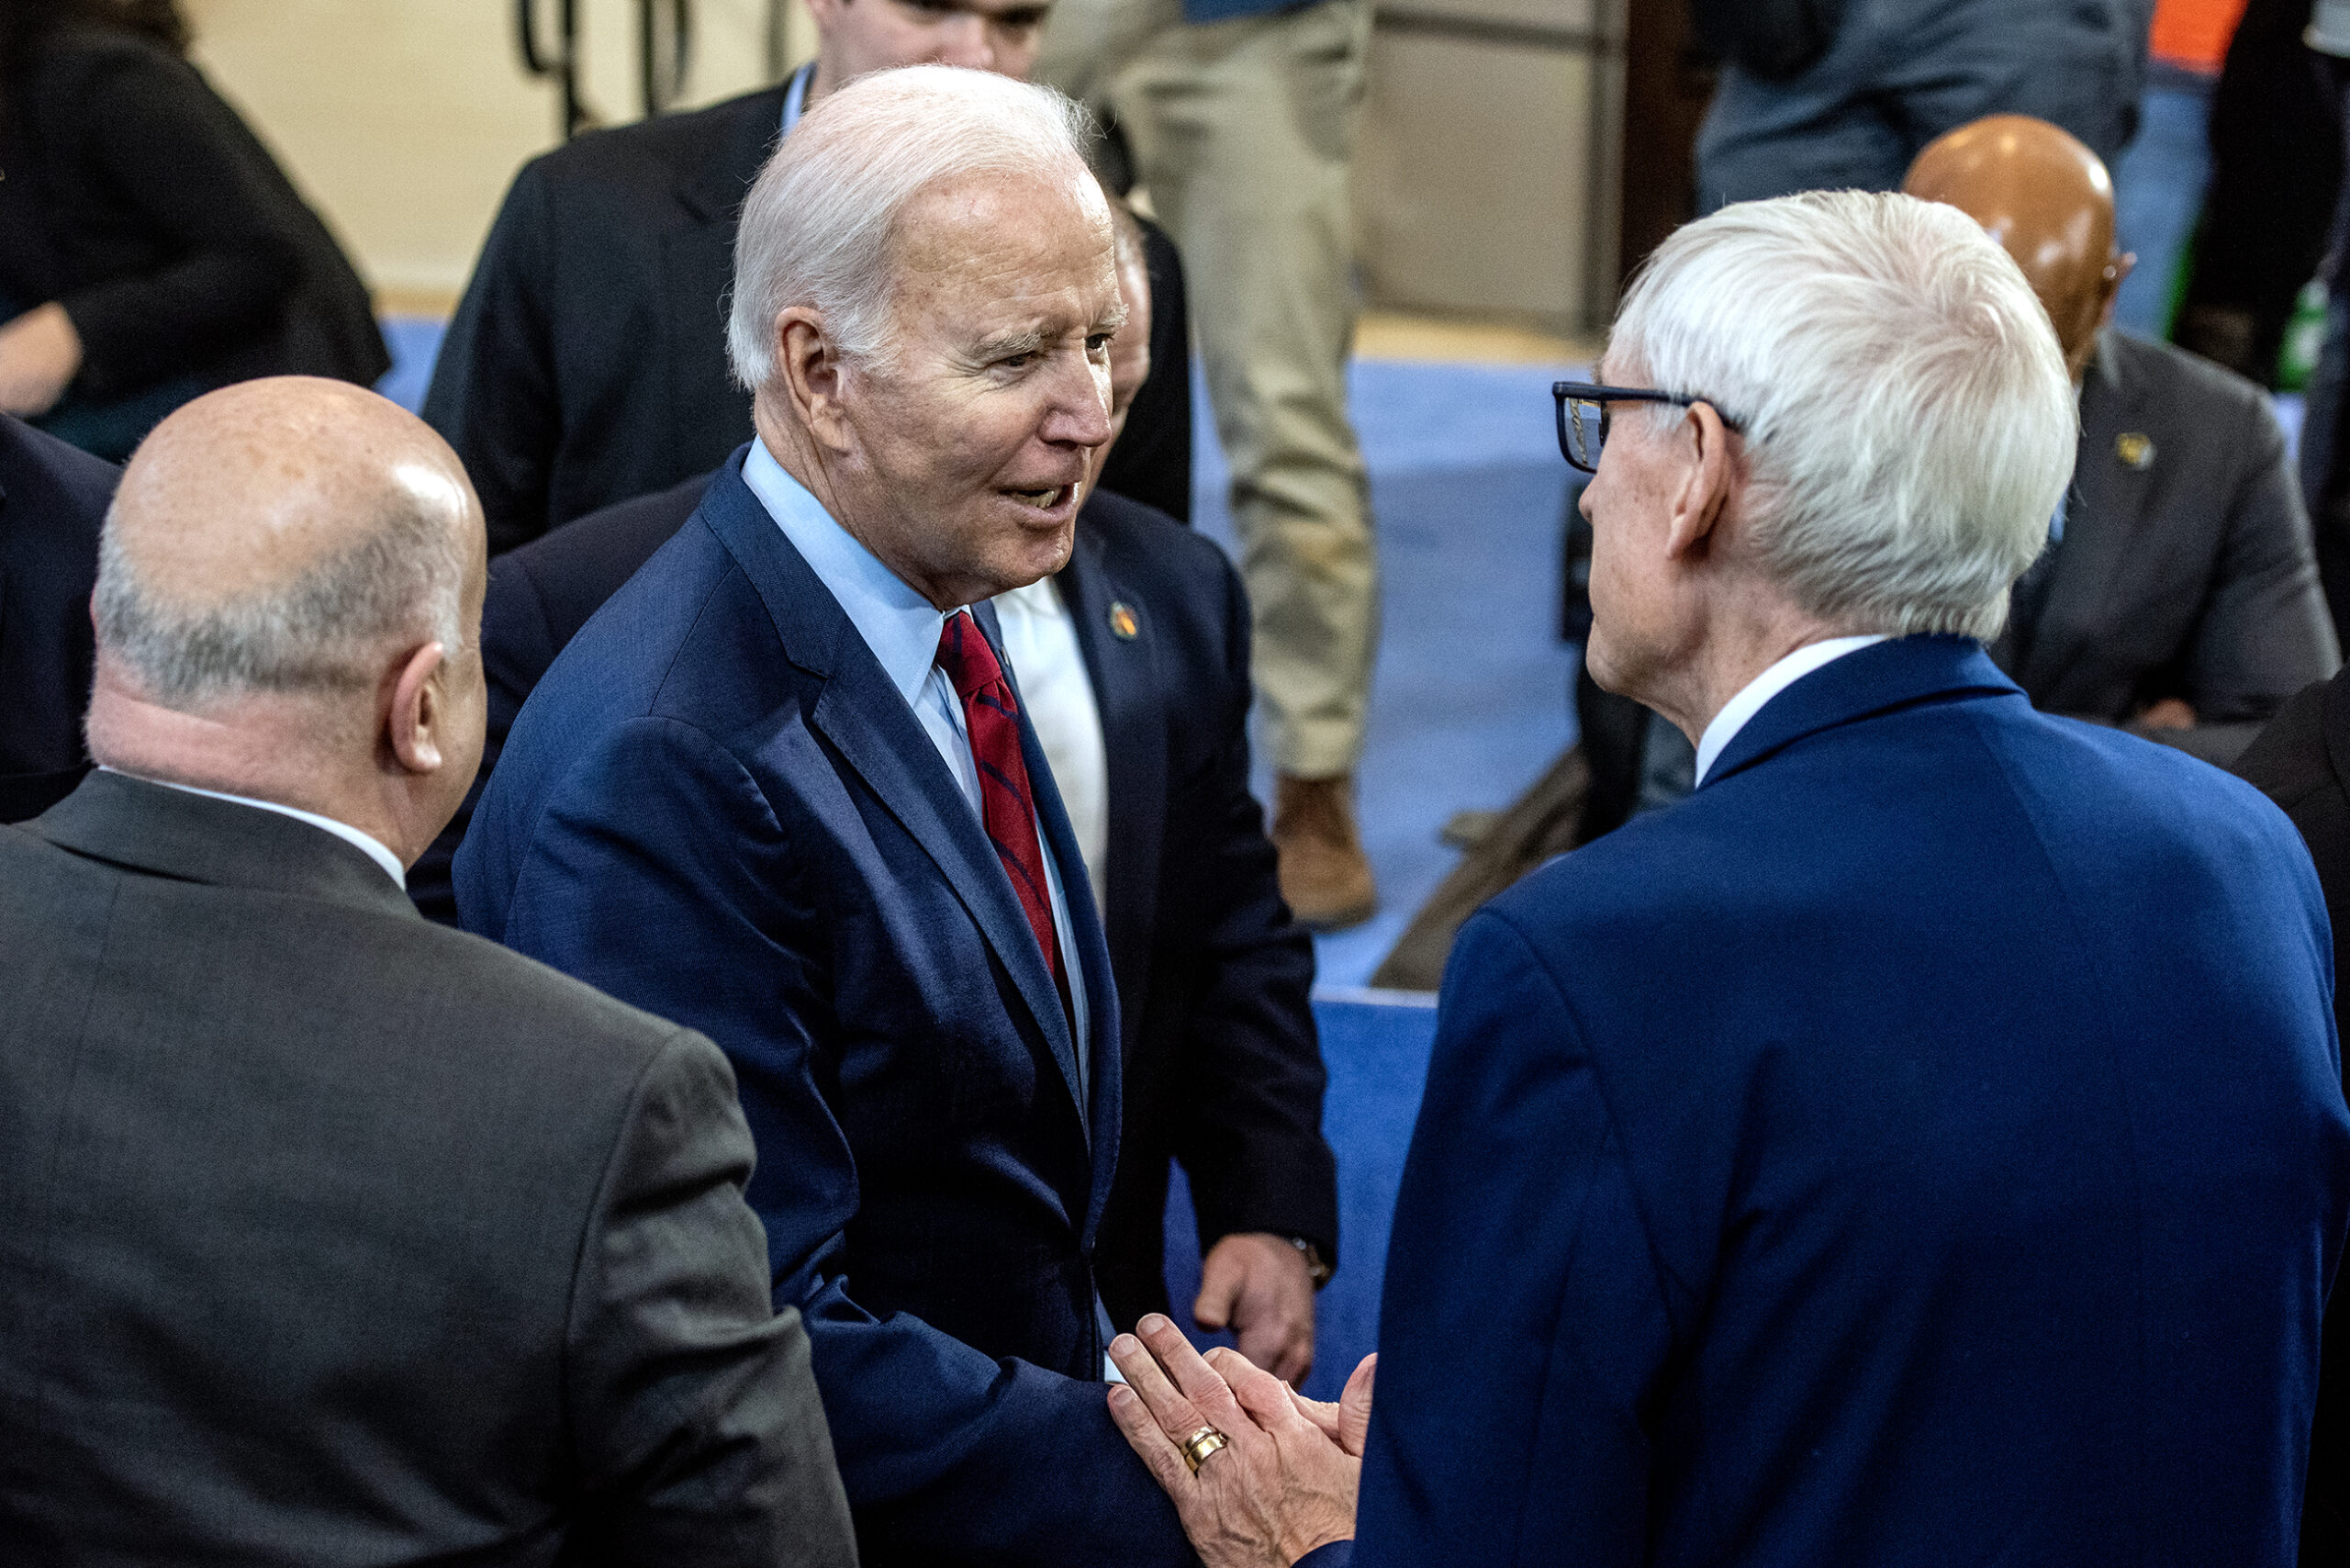 President Joe Biden shakes hands with Gov. Tony Evers.